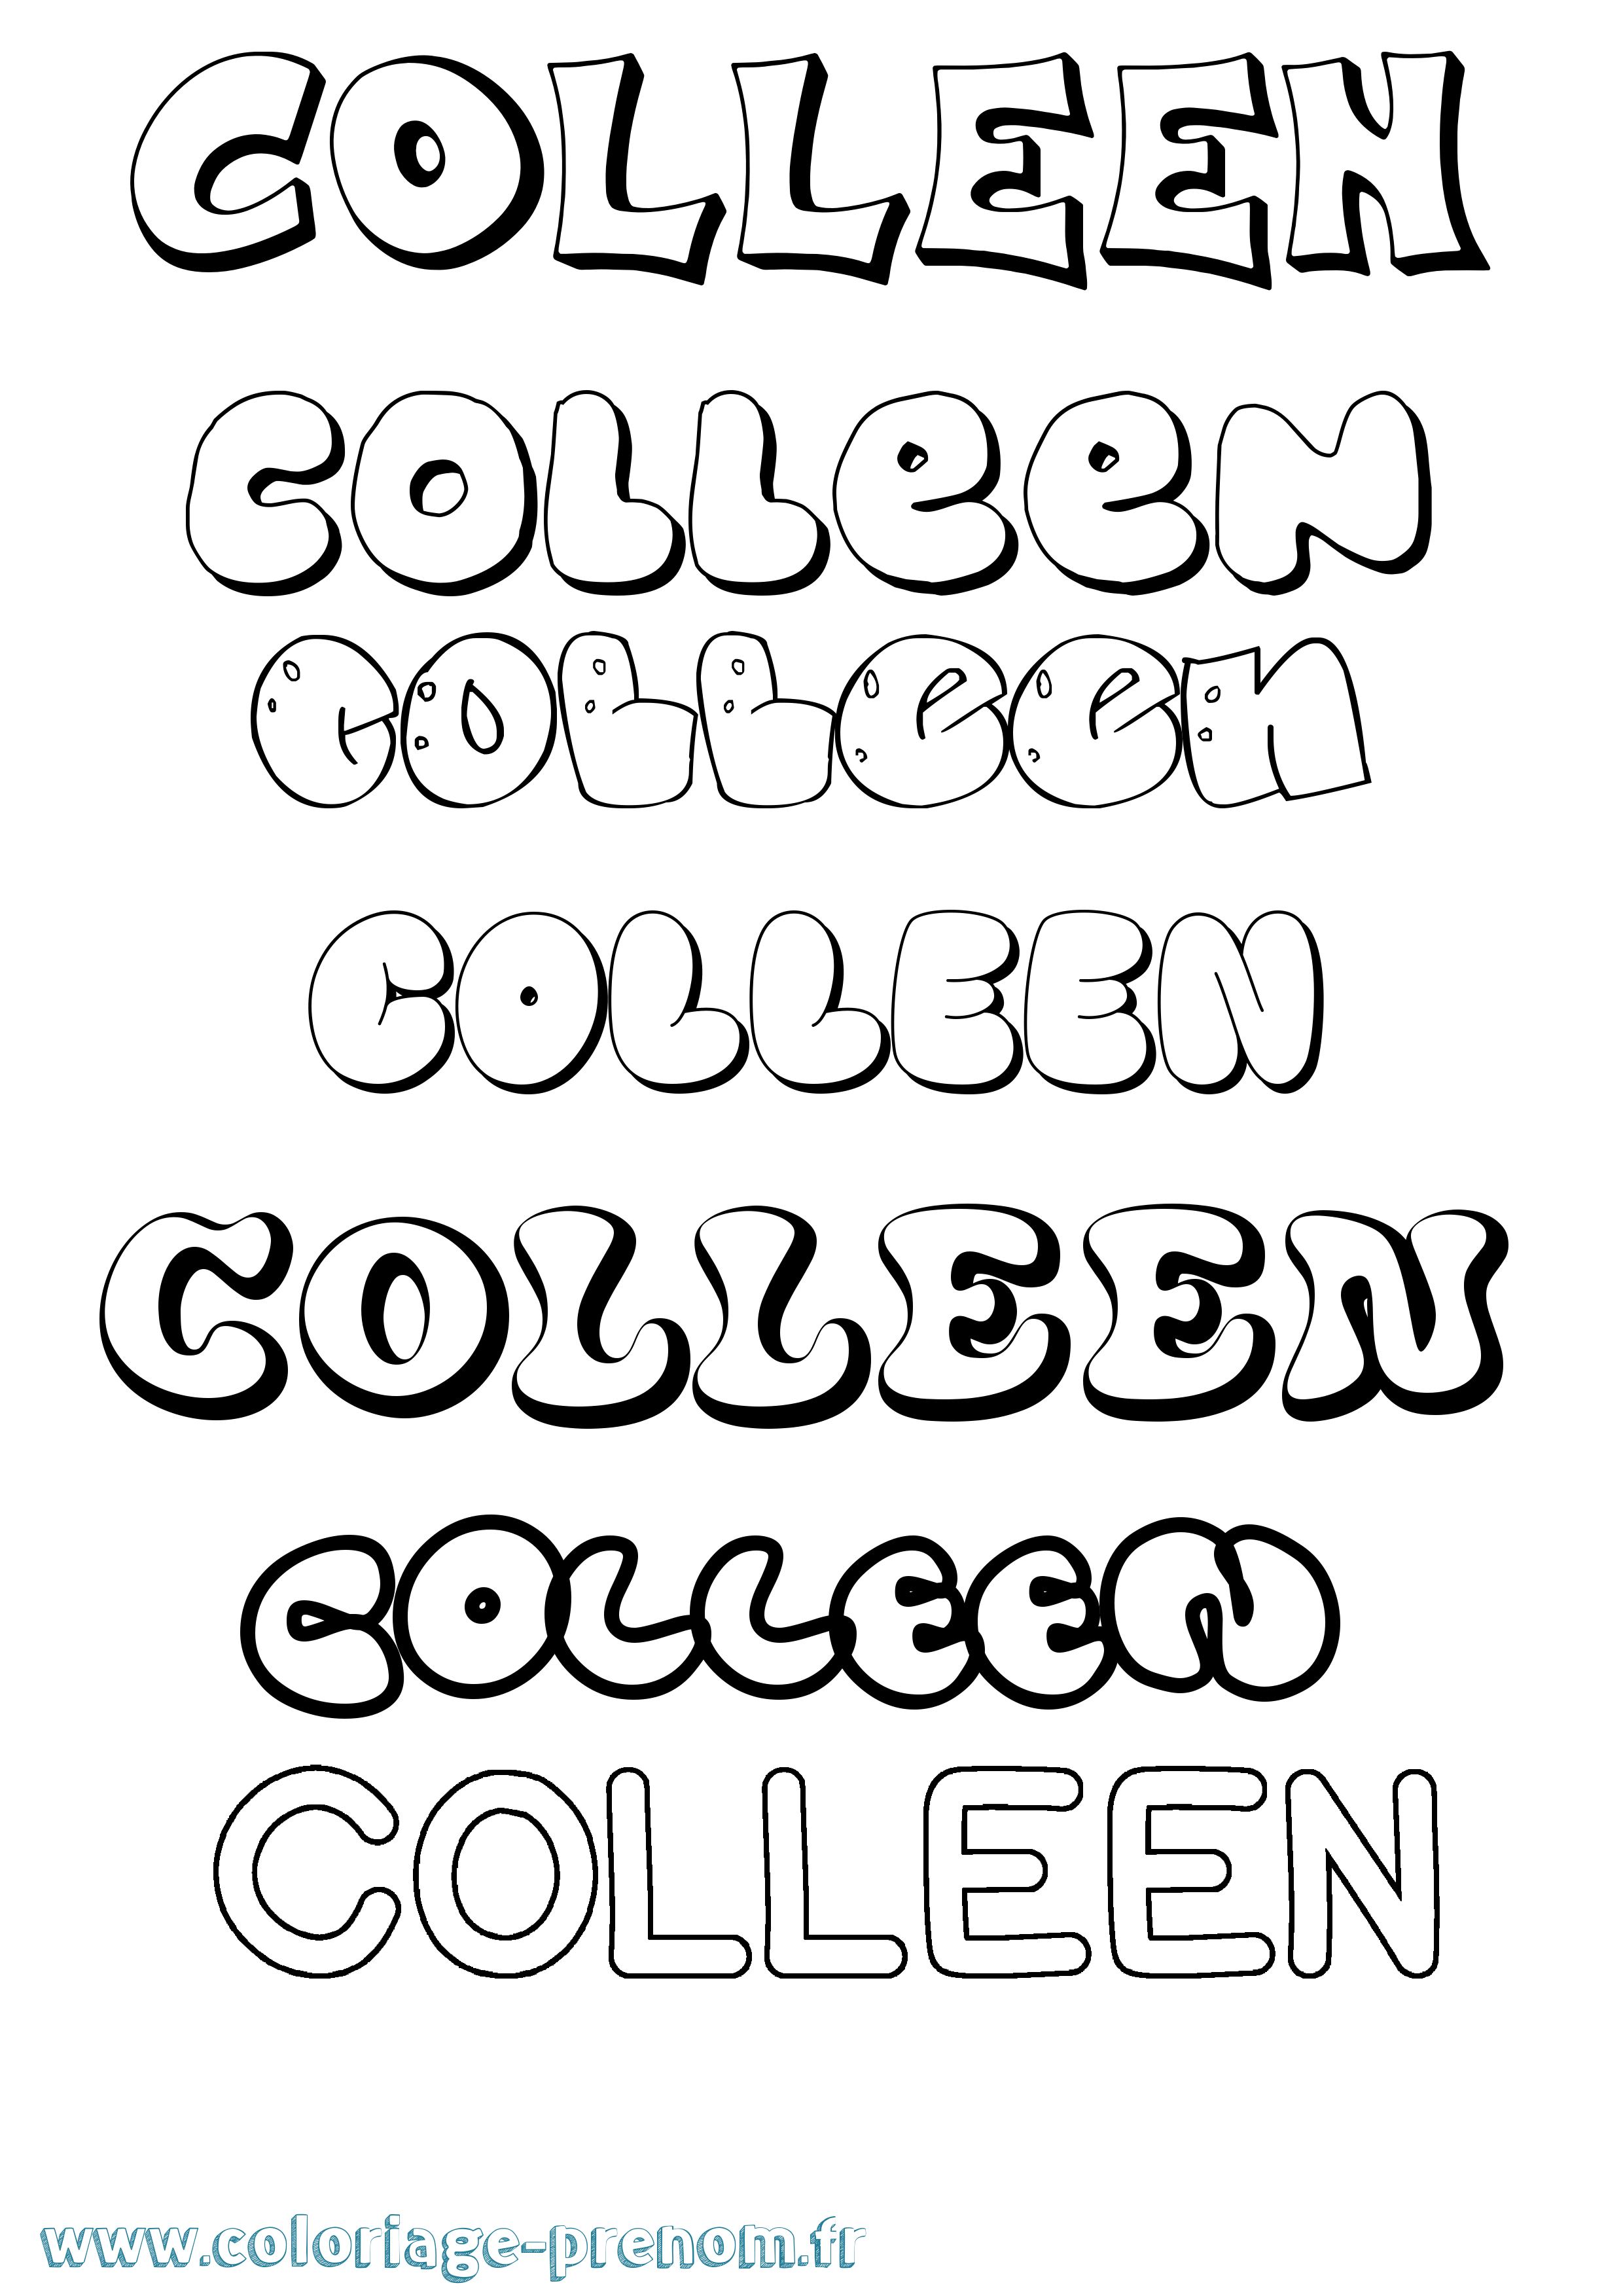 Coloriage prénom Colleen Bubble